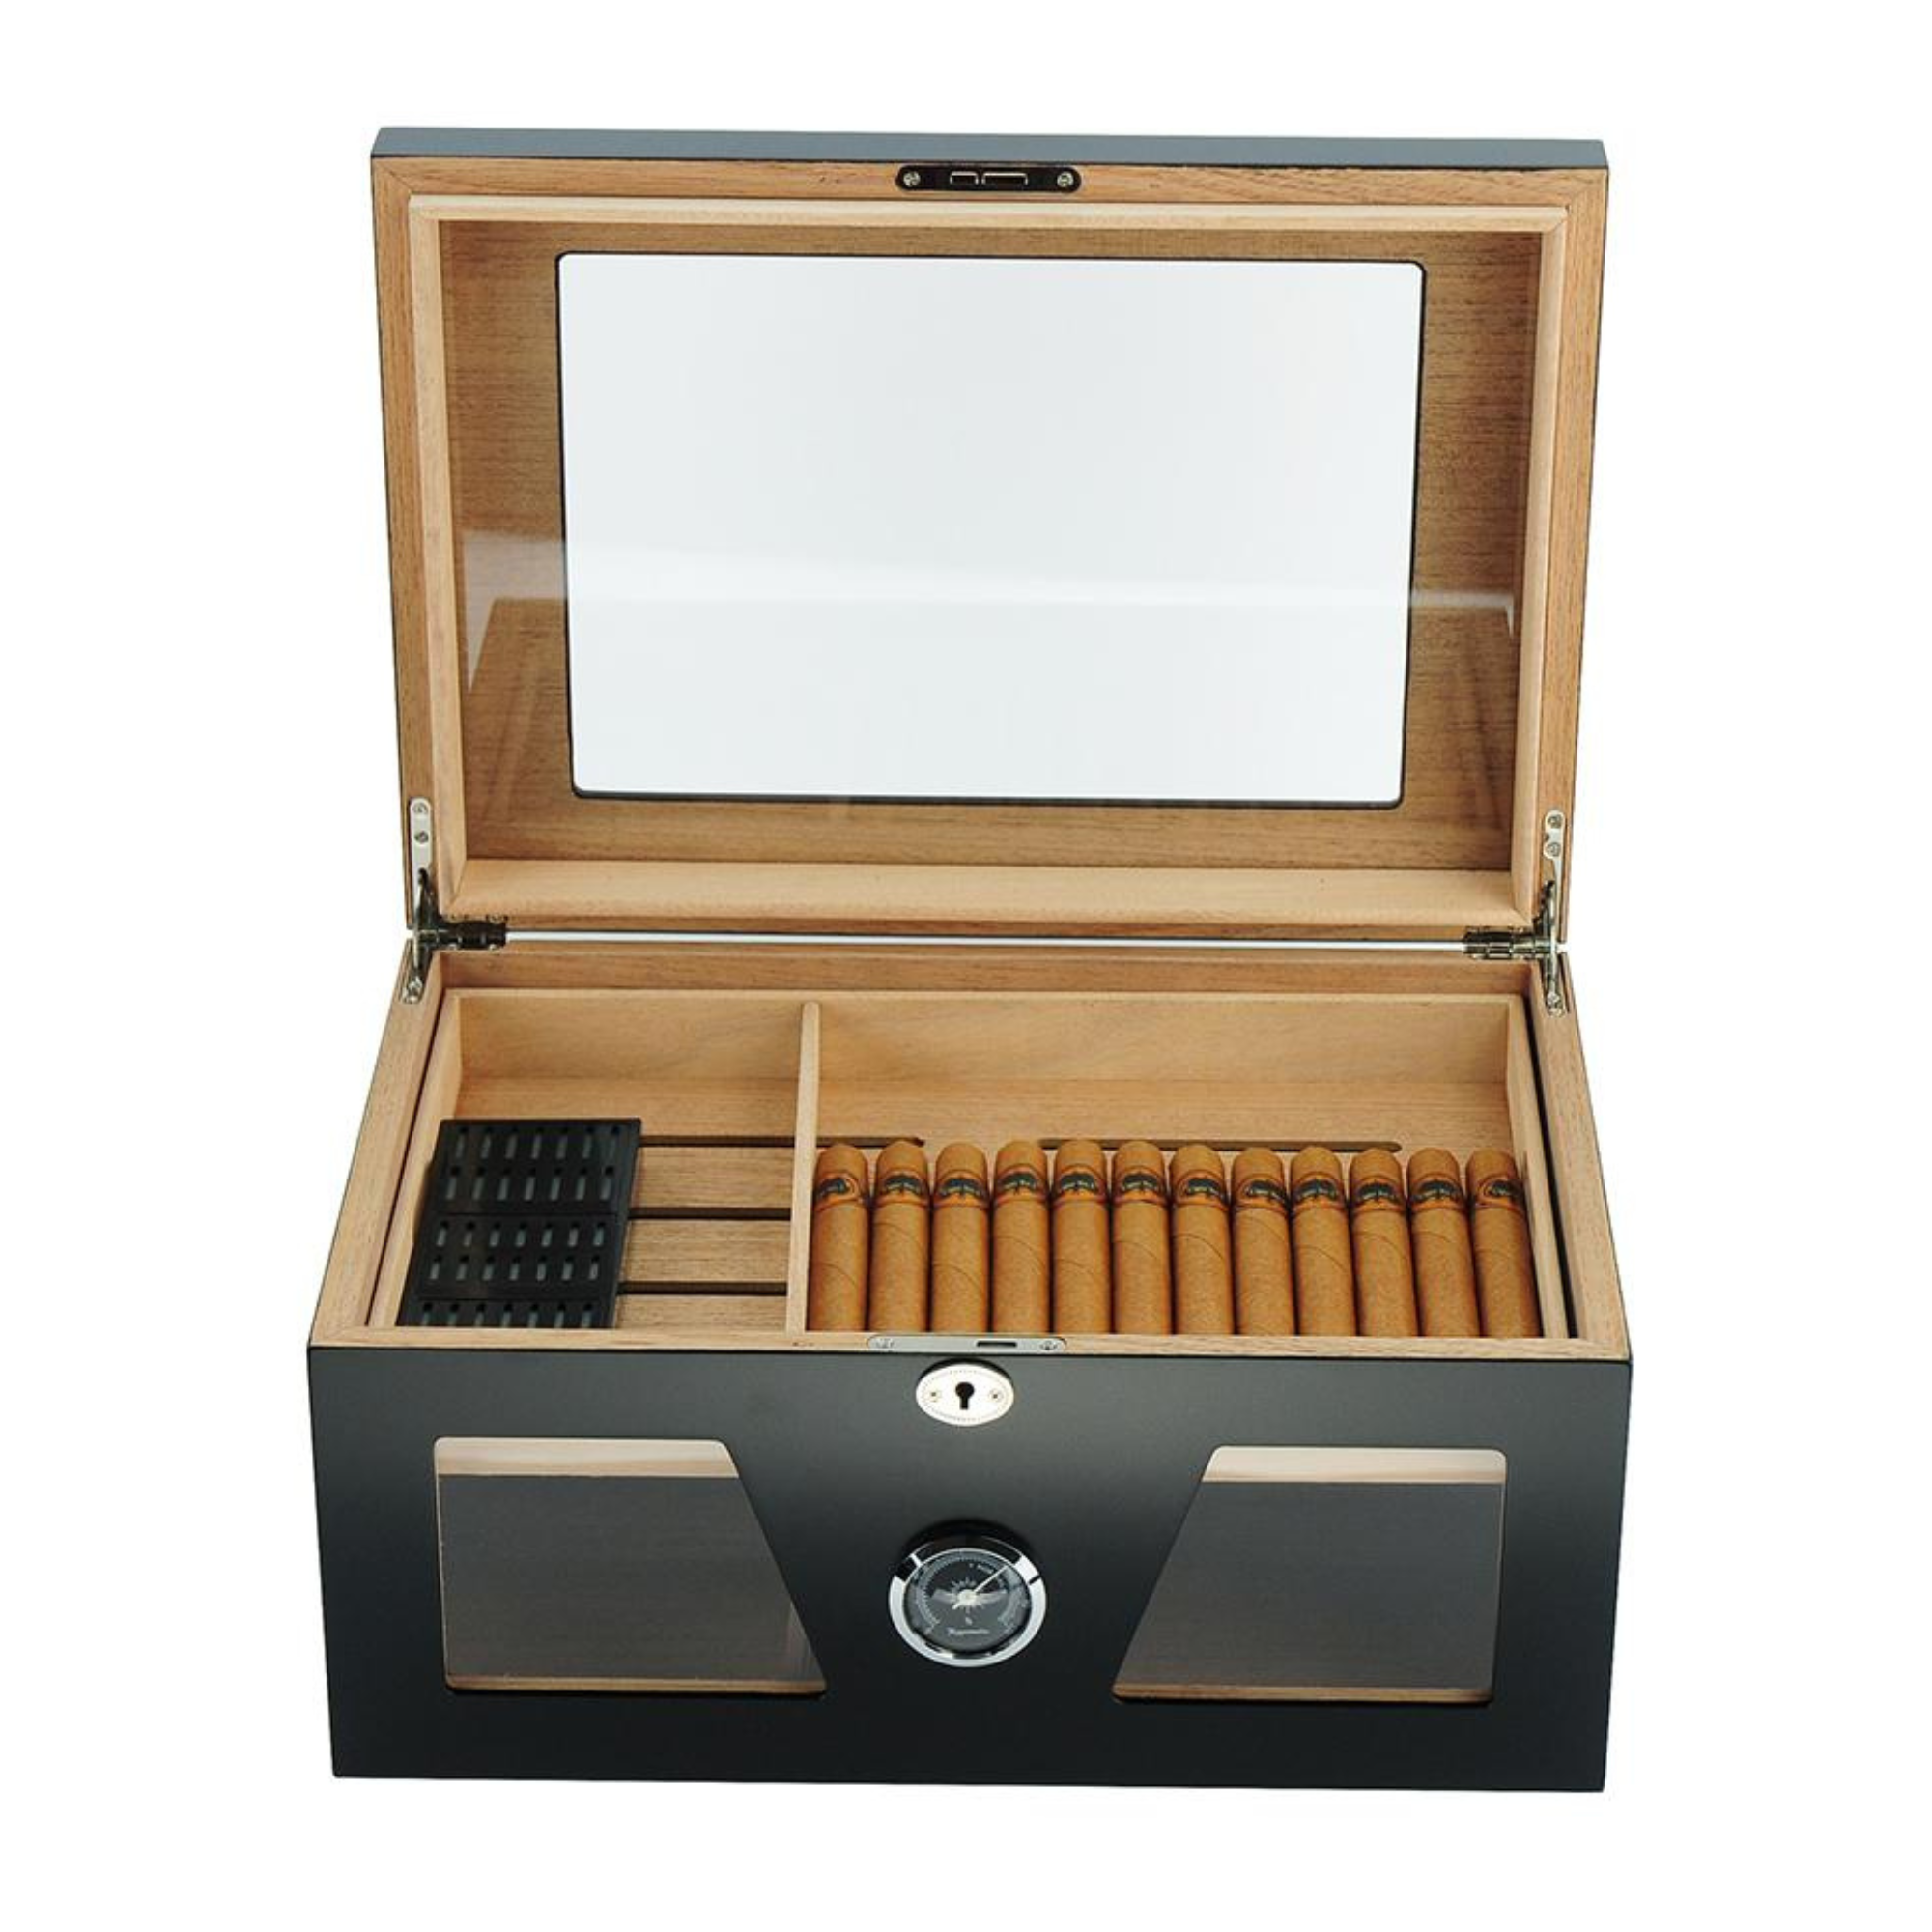 100 CT Black Cigar Humidor Spanish Cedar Box for Cigars